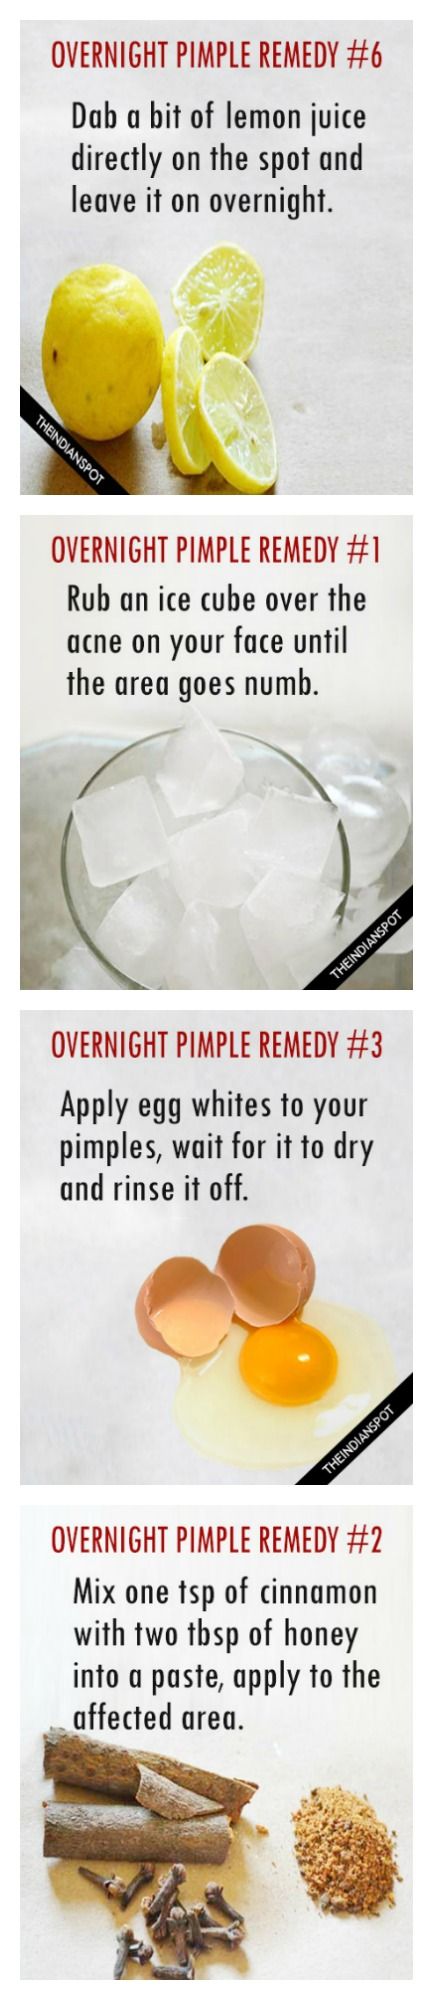 Overnight pimple remedies